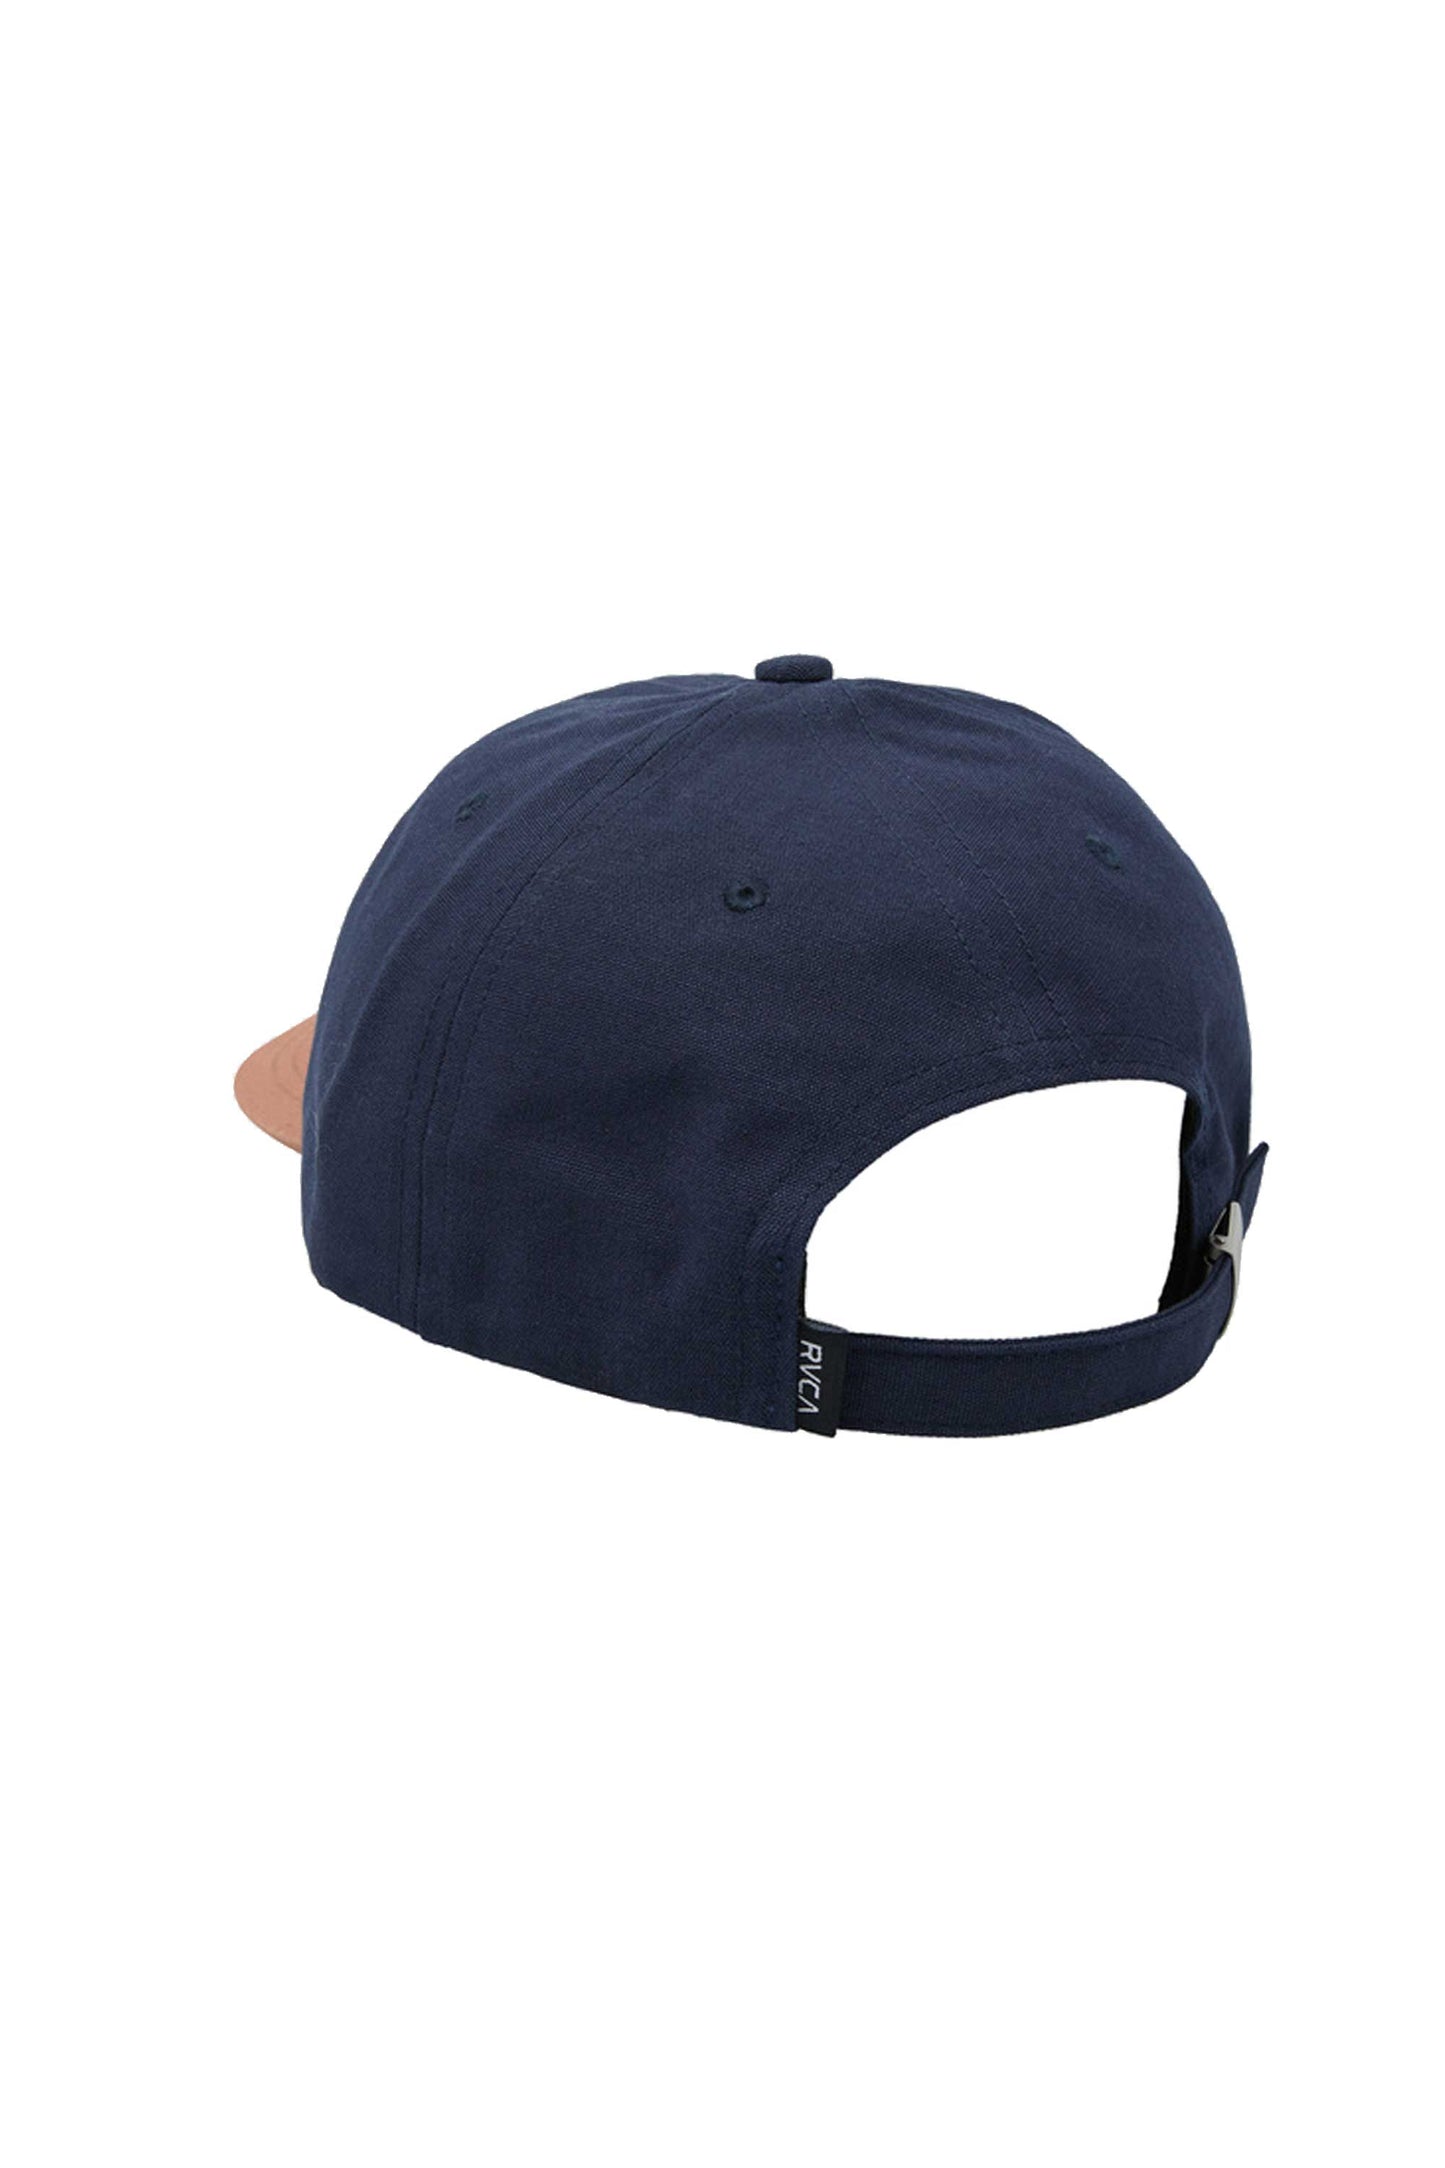 Pukas-Surf-Shop-man-rvca-chainmail-baseball-hat-indigo